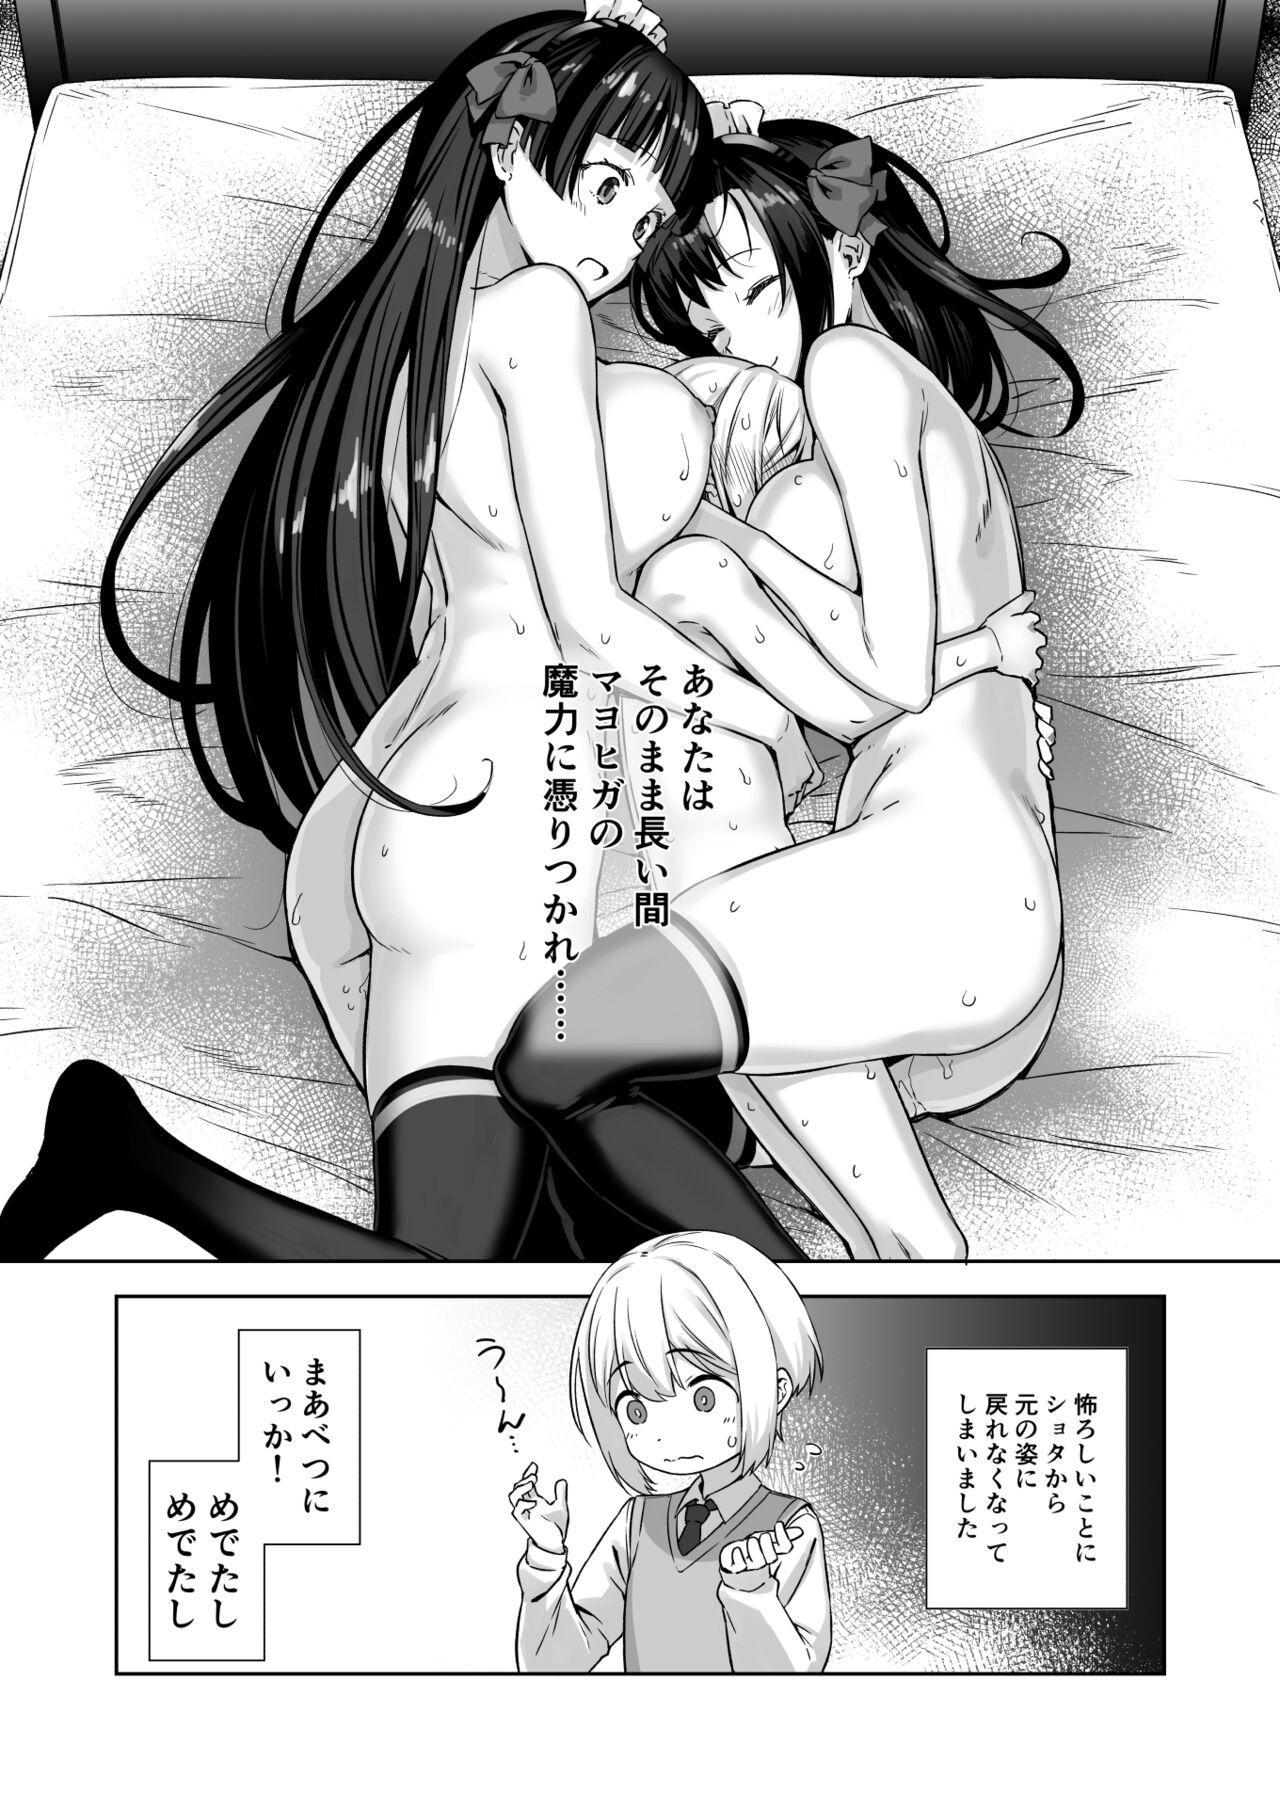 Omake Manga 19